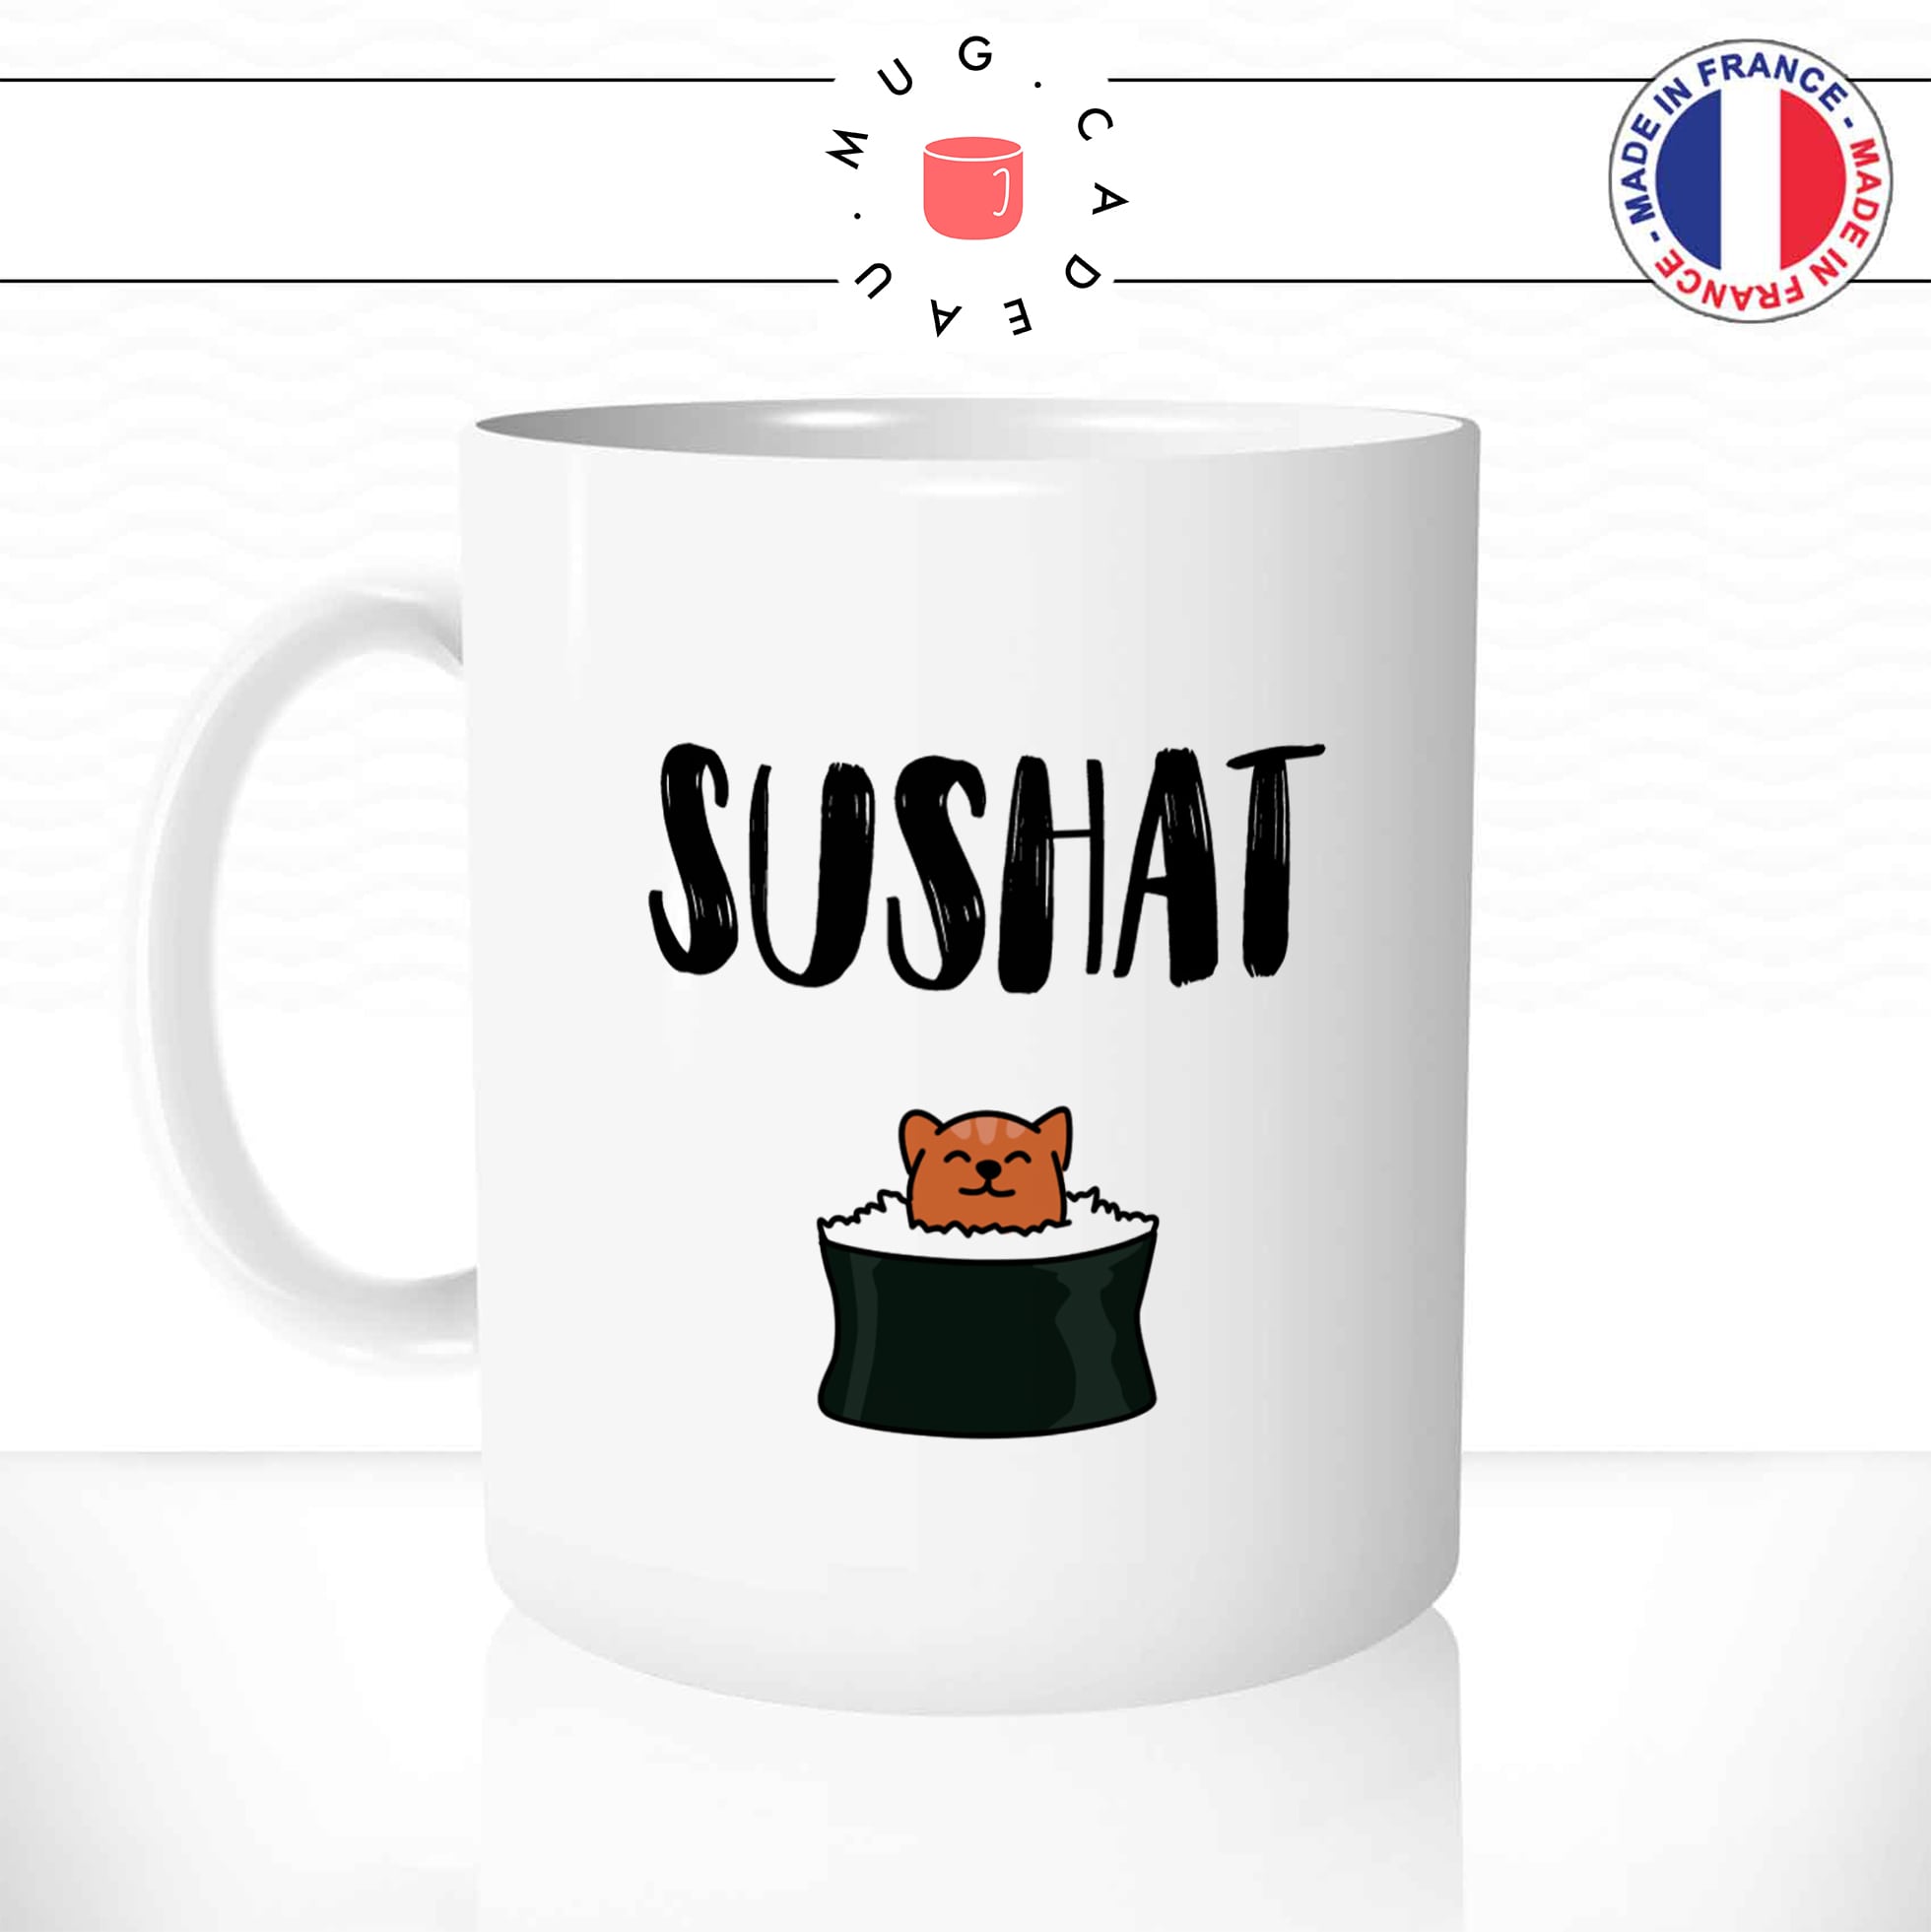 mug-tasse-sushat-chat-chaton-animal-sushis-makis-california-rolls-japonais-sashimis-nigiri-offrir-fun-humour-idée-cadeau-original-personnalisée-min